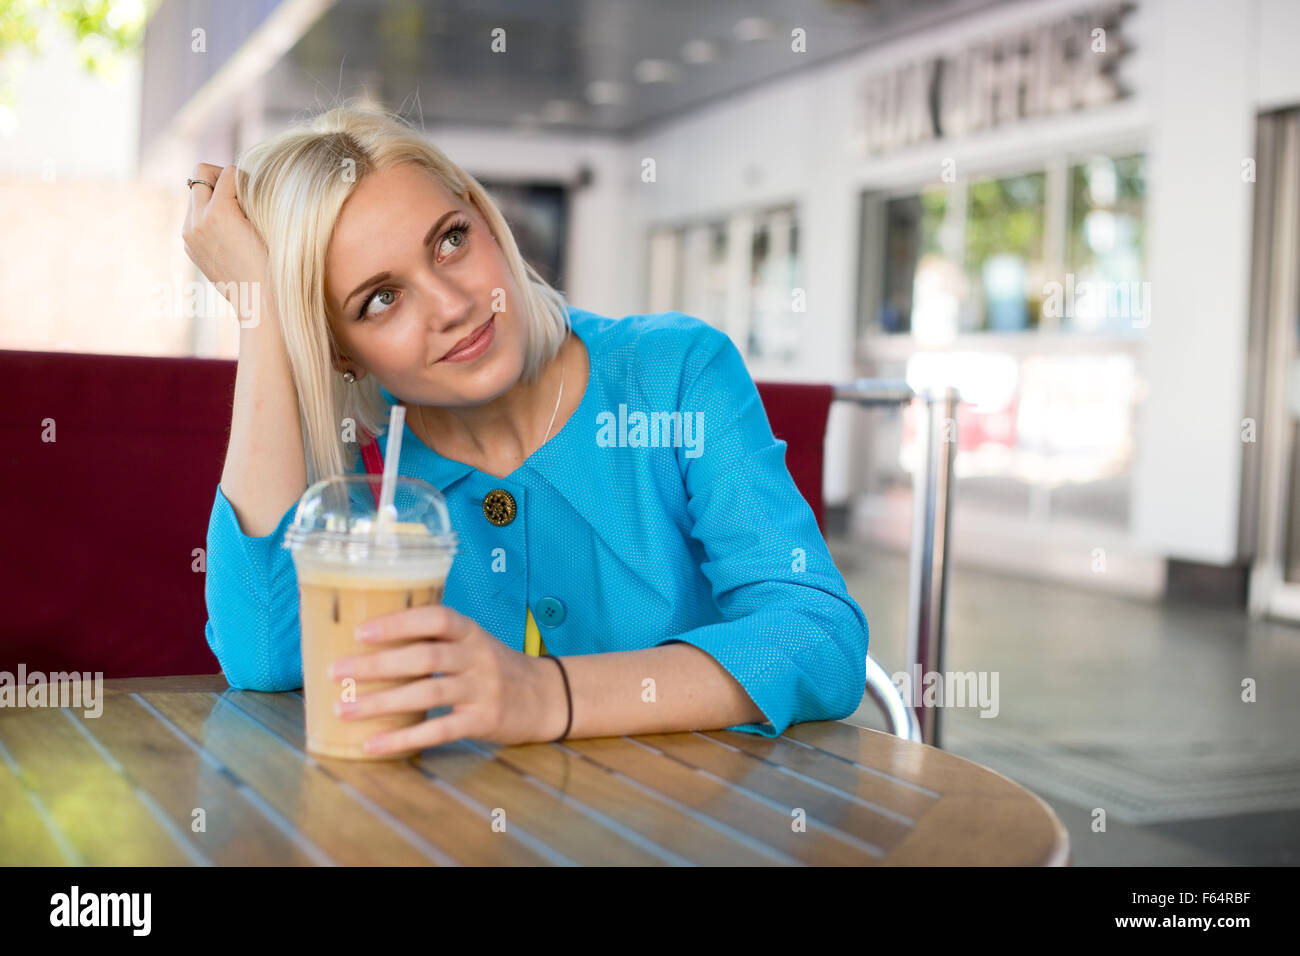 https://c8.alamy.com/comp/F64RBF/young-woman-sitting-at-a-caffee-shop-enjoying-a-frappe-F64RBF.jpg